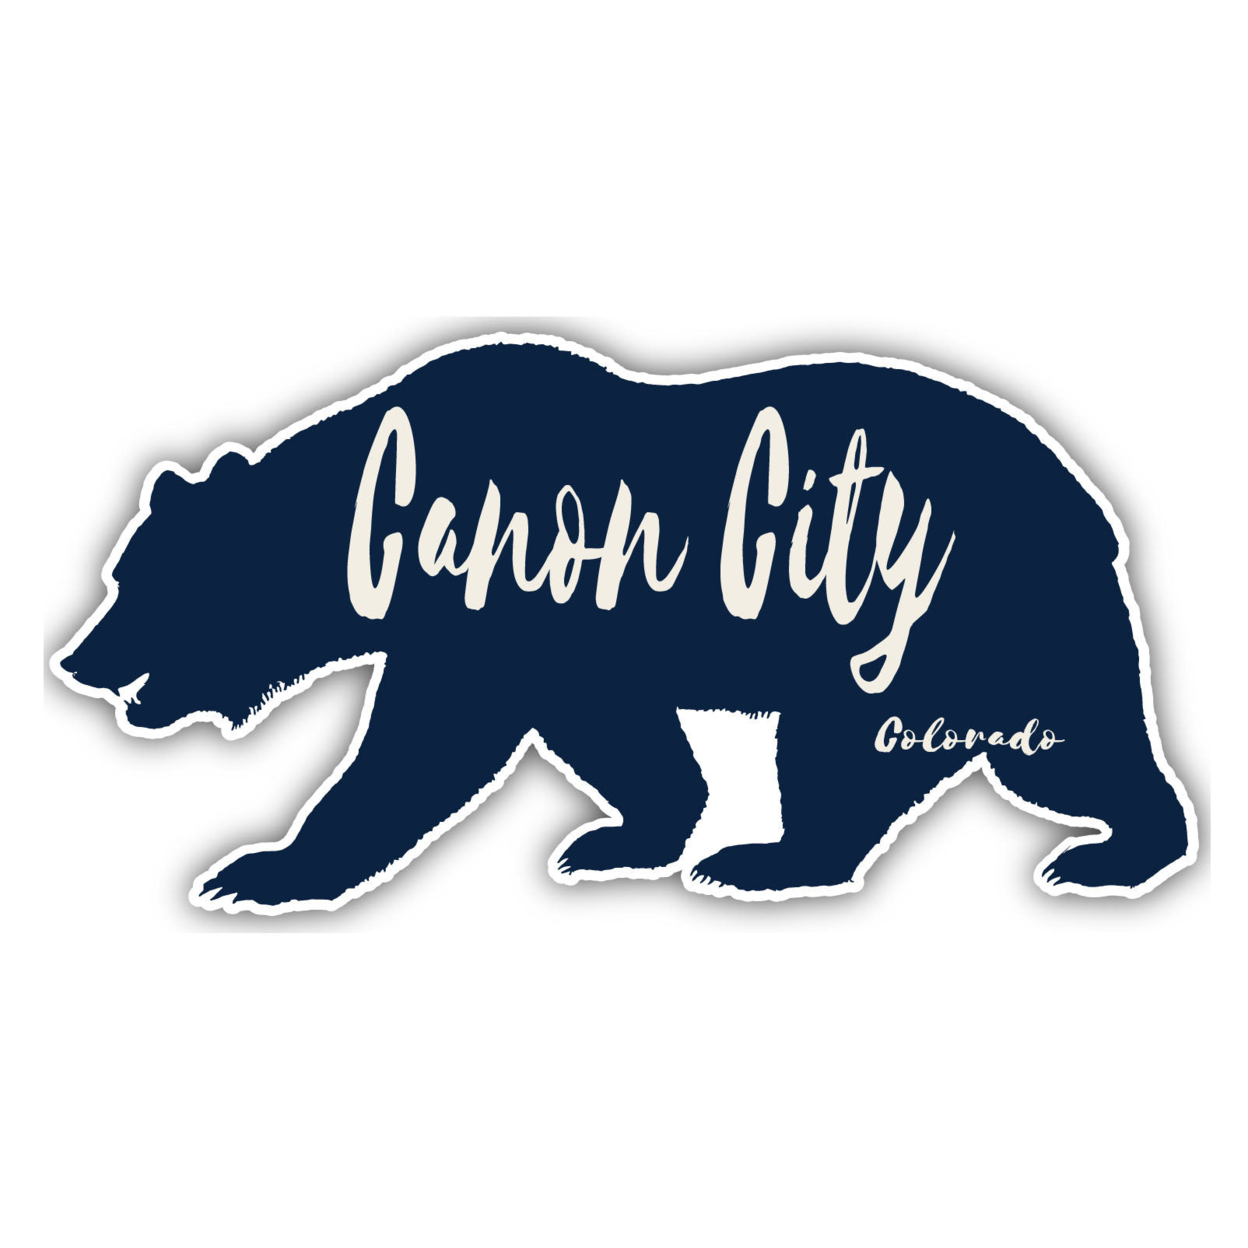 Canon City Colorado Souvenir Decorative Stickers (Choose Theme And Size) - Single Unit, 4-Inch, Camp Life